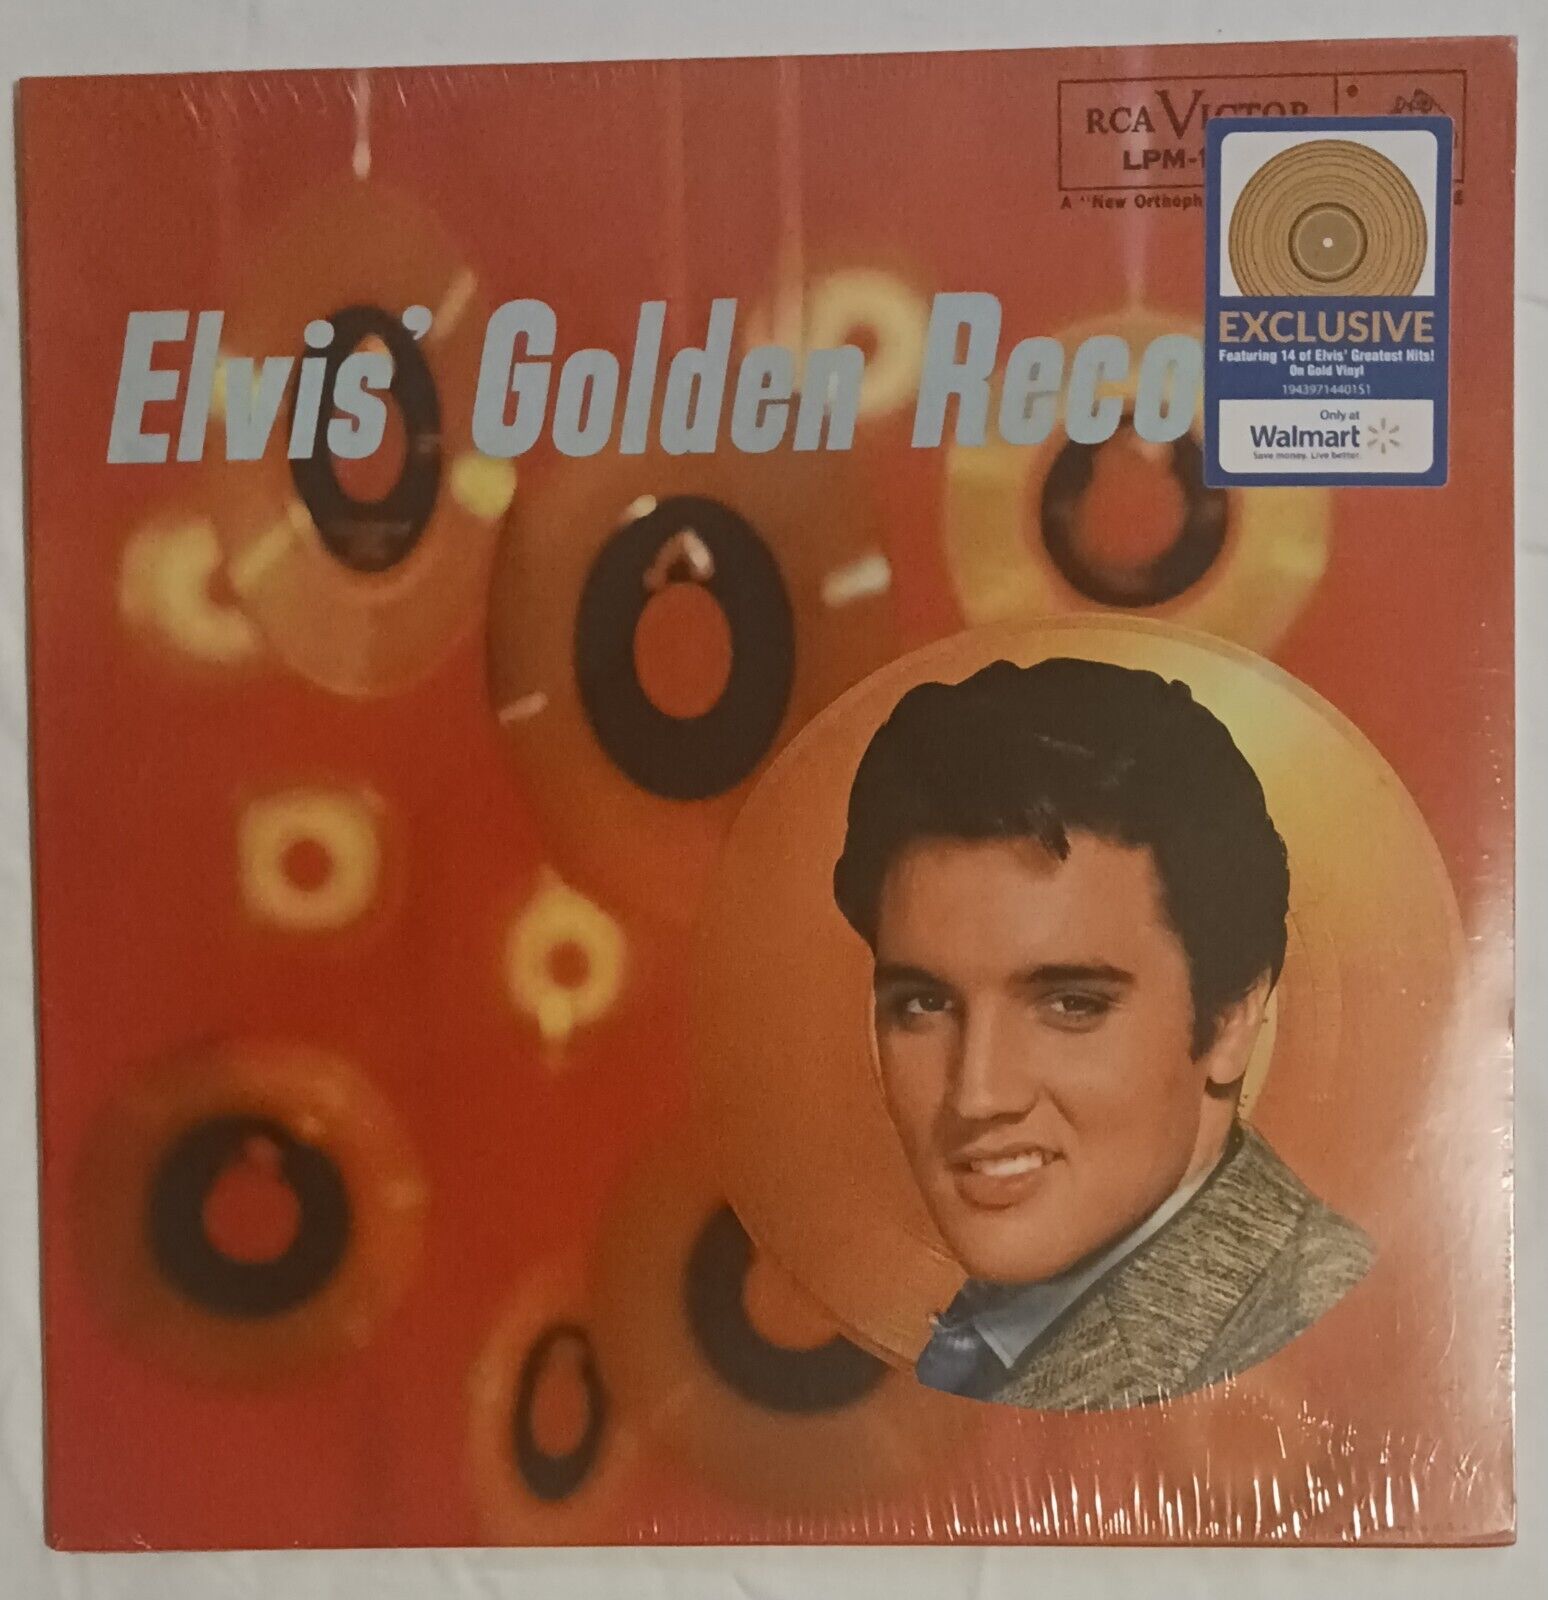 NEW - Elvis Presley Elvis Golden Records Vinyl Record LP